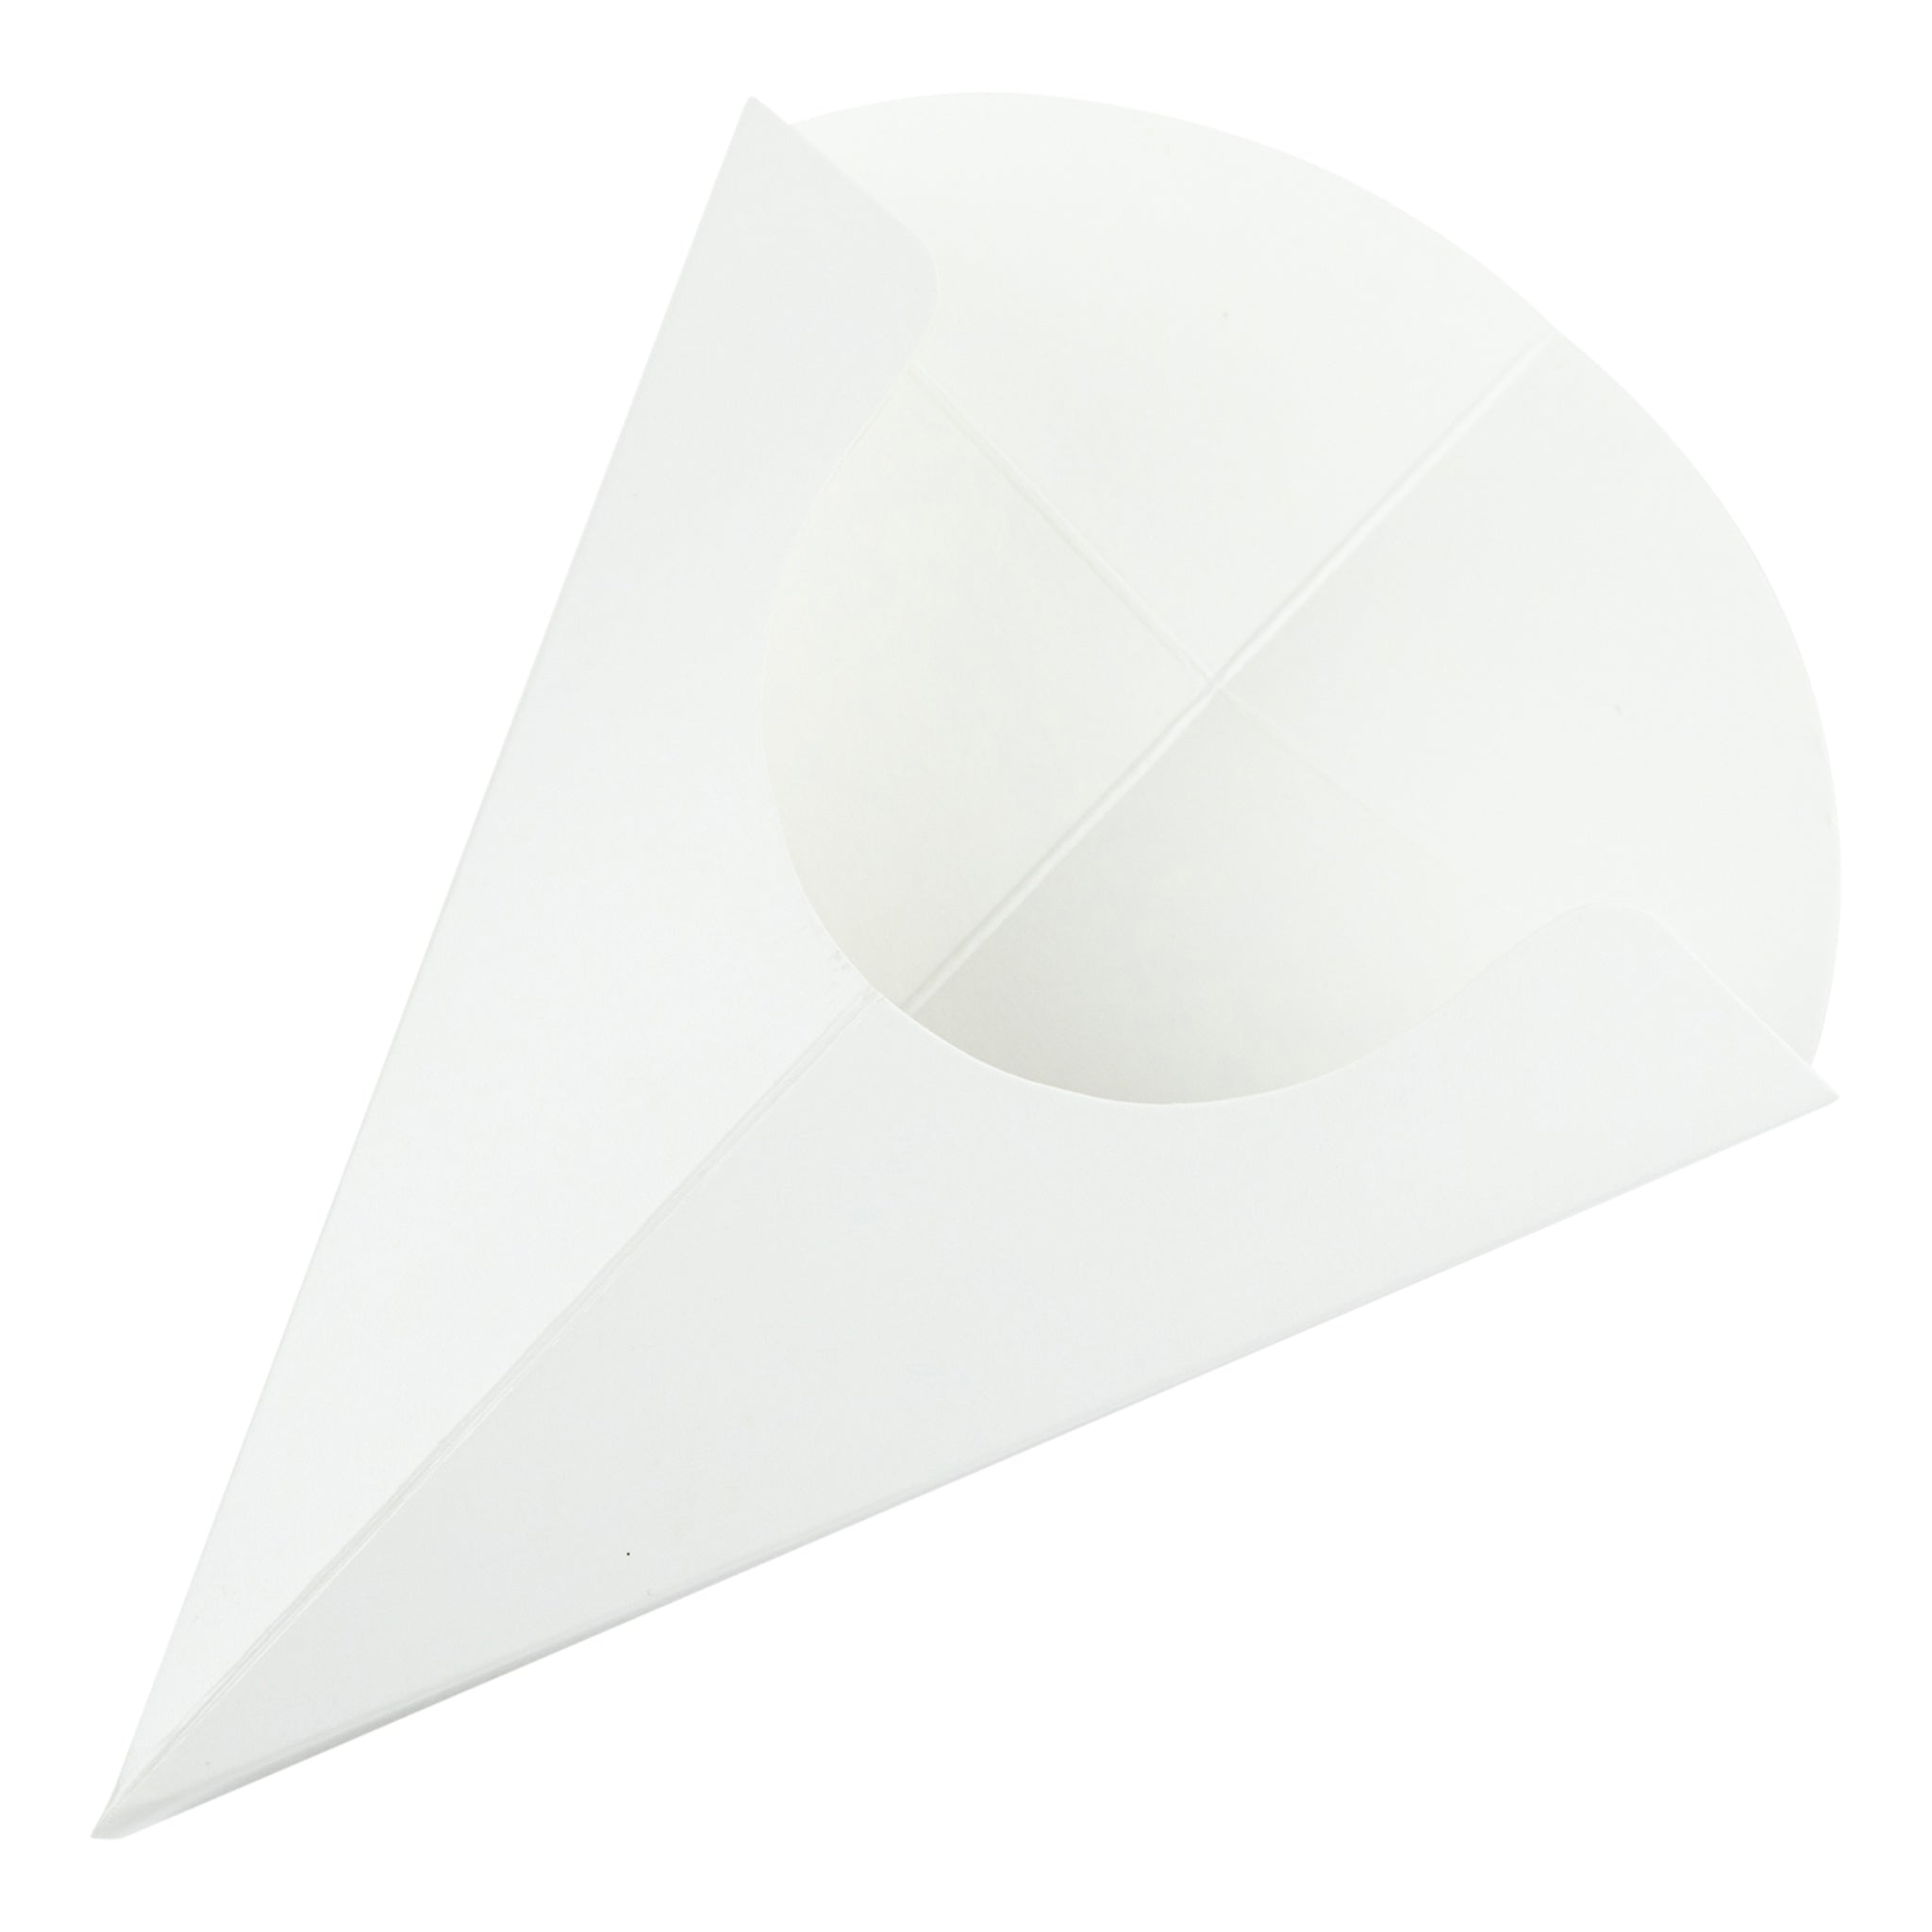 Plain white Crepe Cone Holders